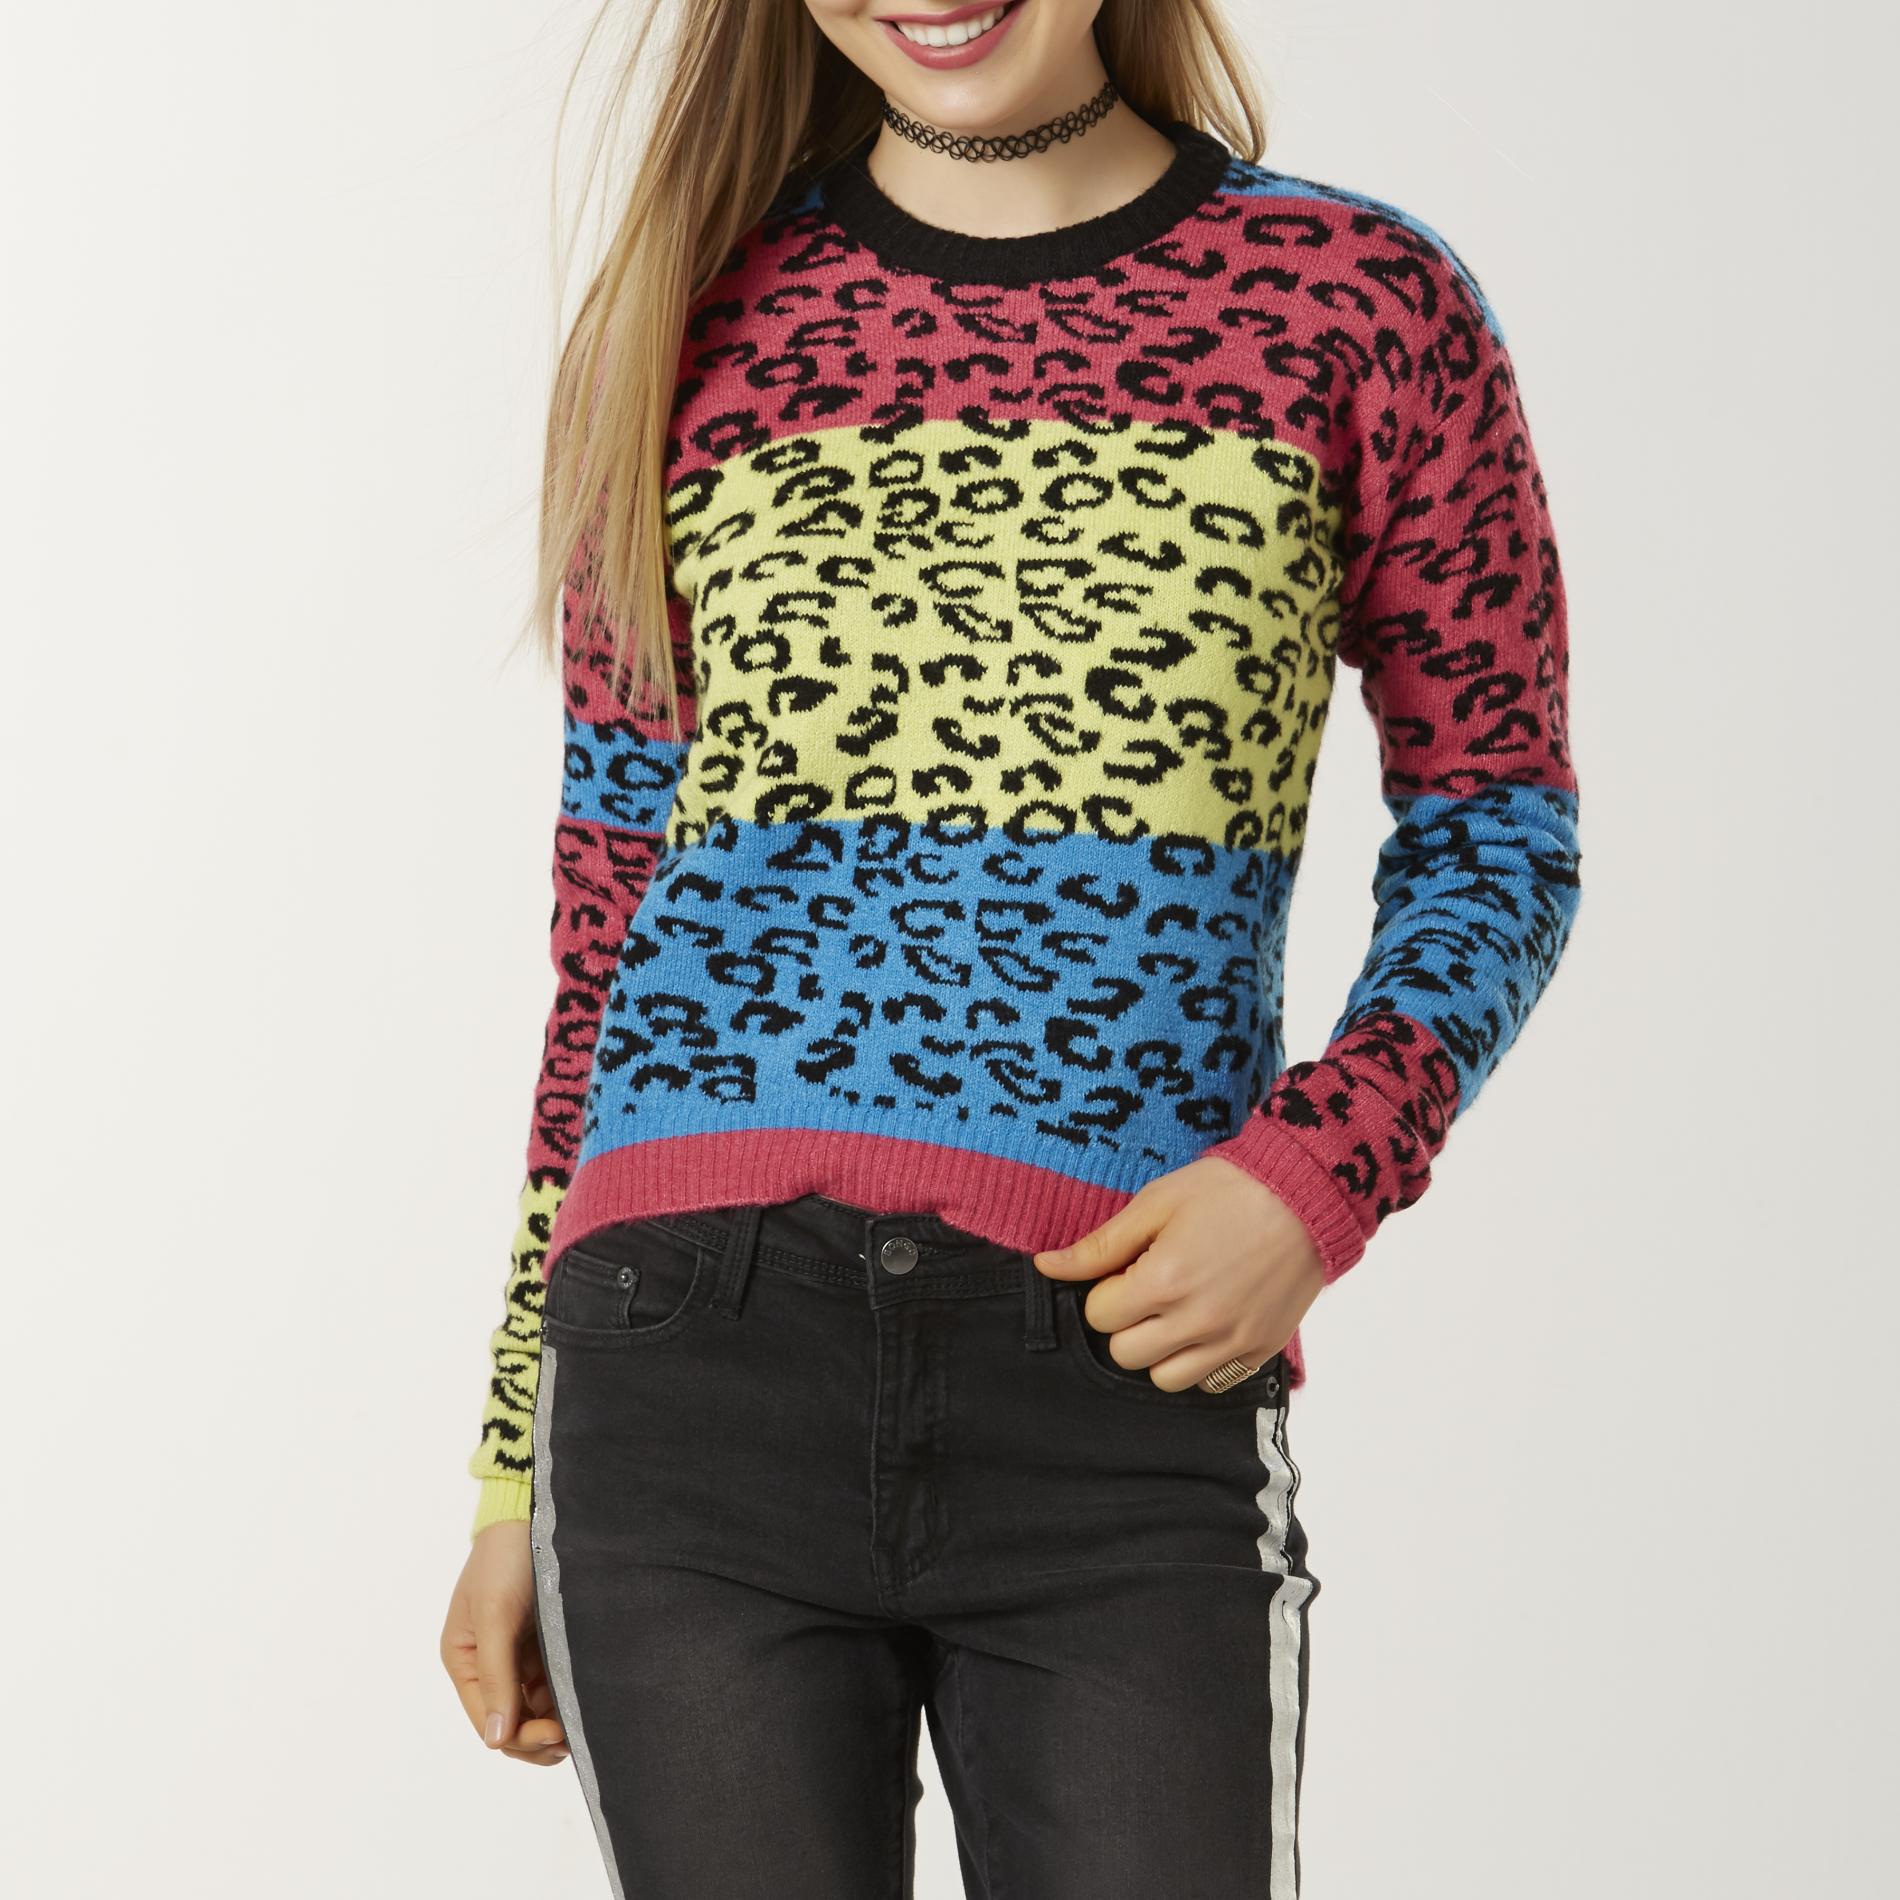 Joe Boxer Juniors' High-Low Sweater - Leopard